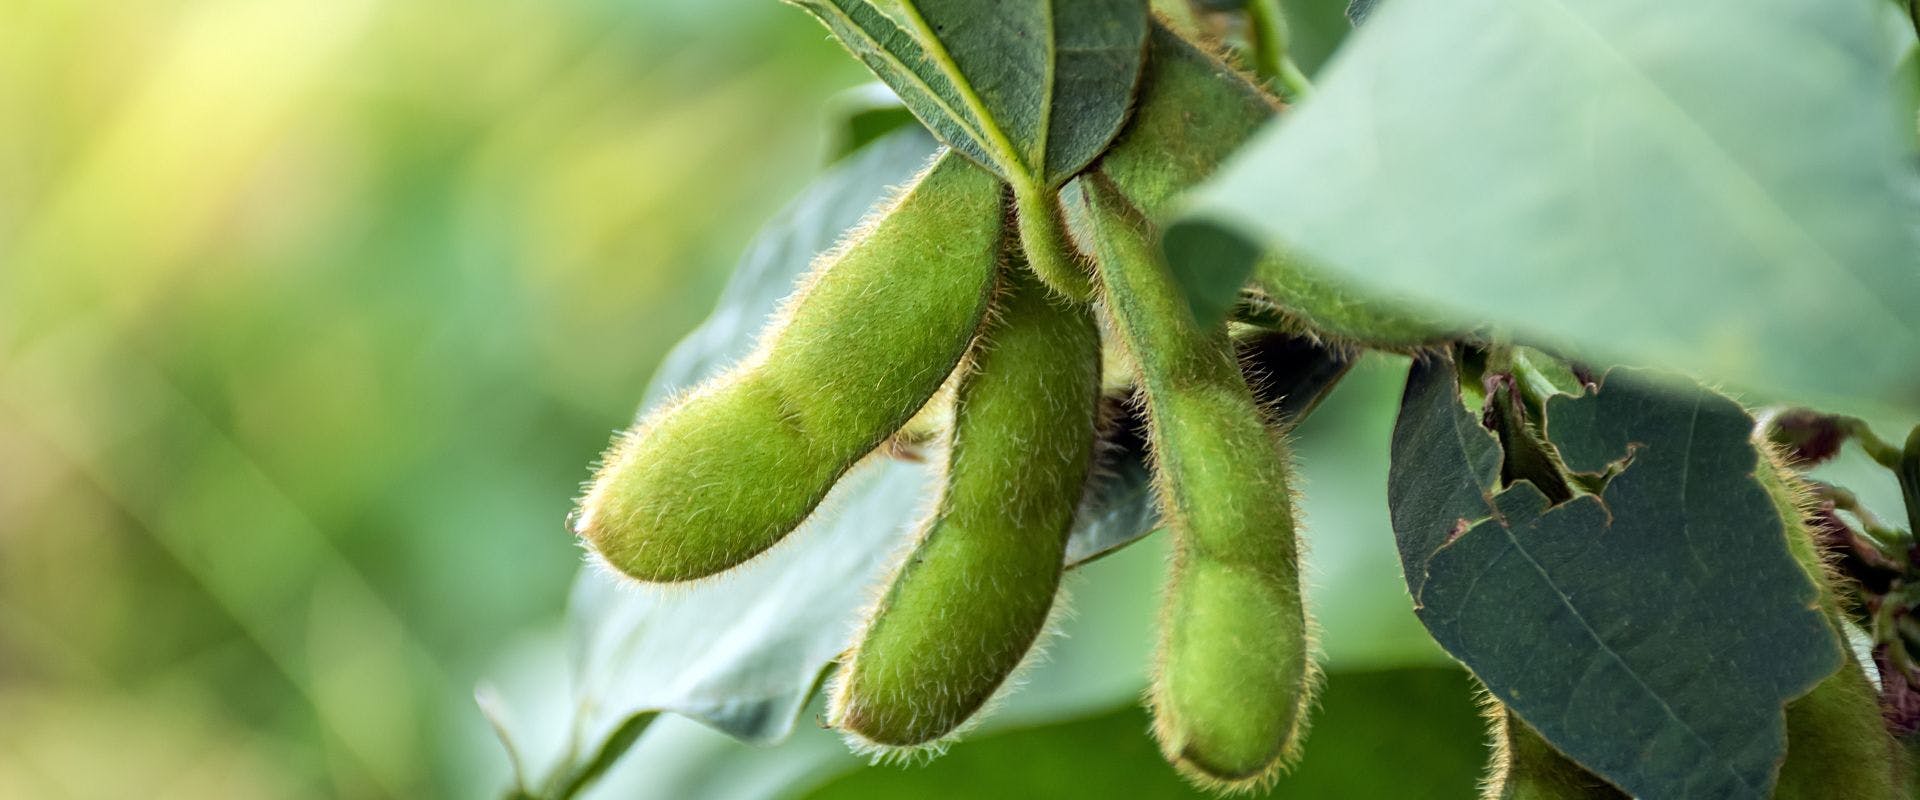 Close-up of edamame beans growing